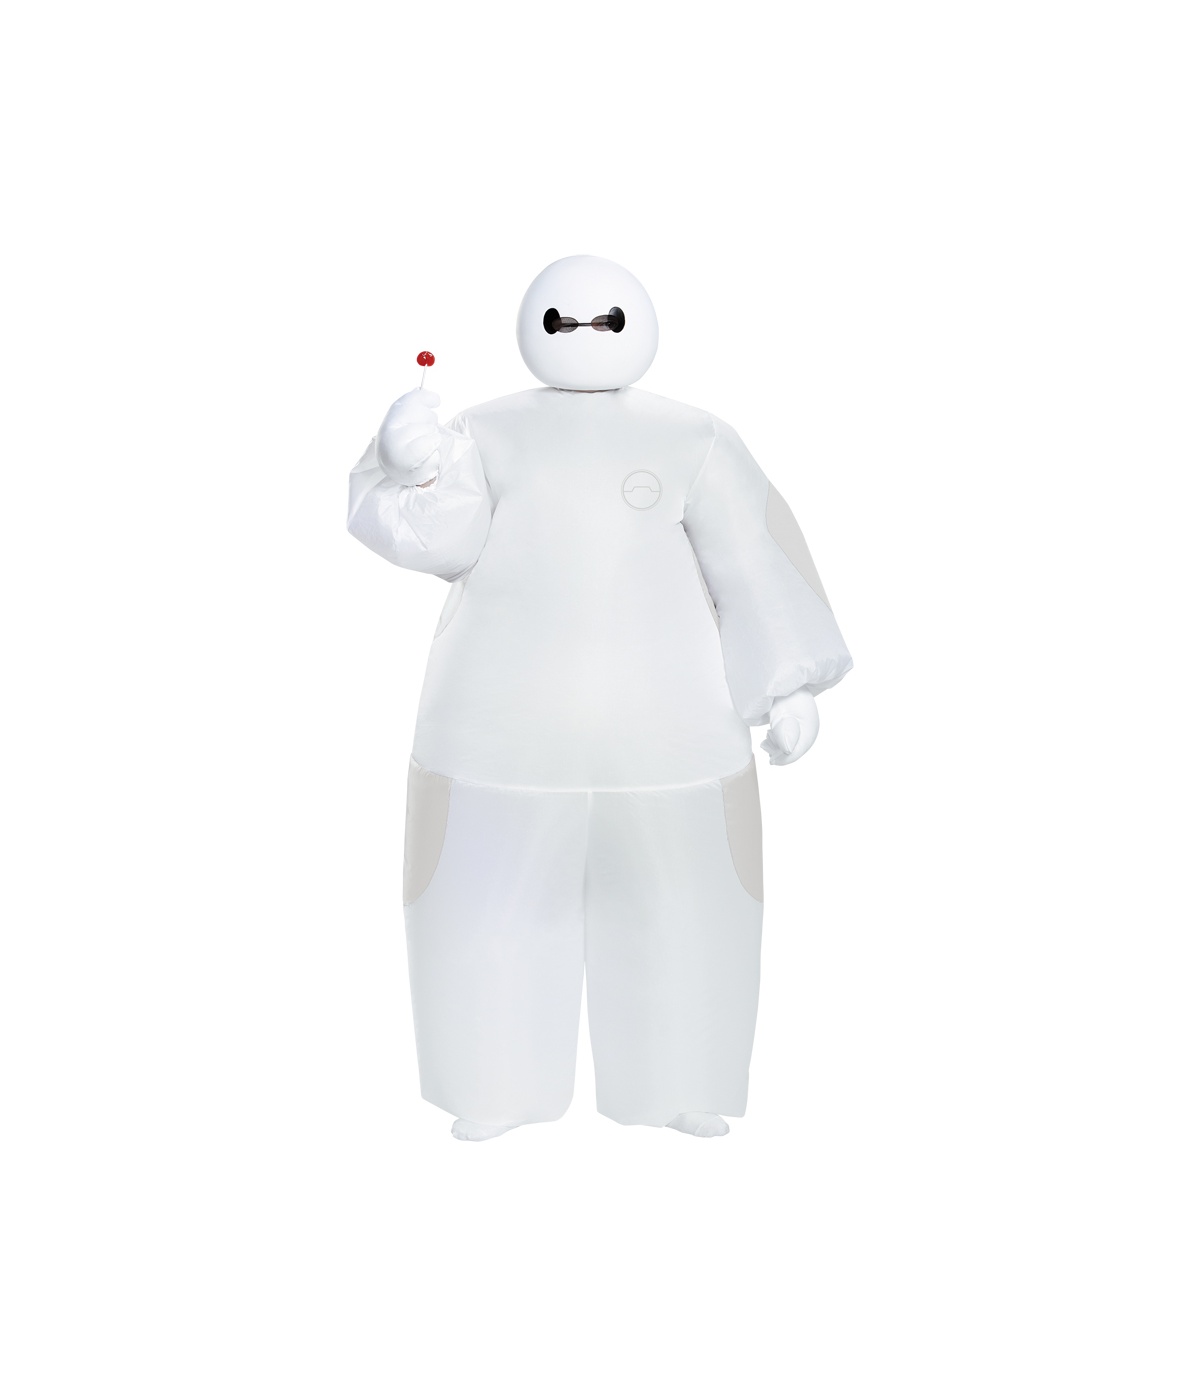  Boys Baymax Inflatable Costume